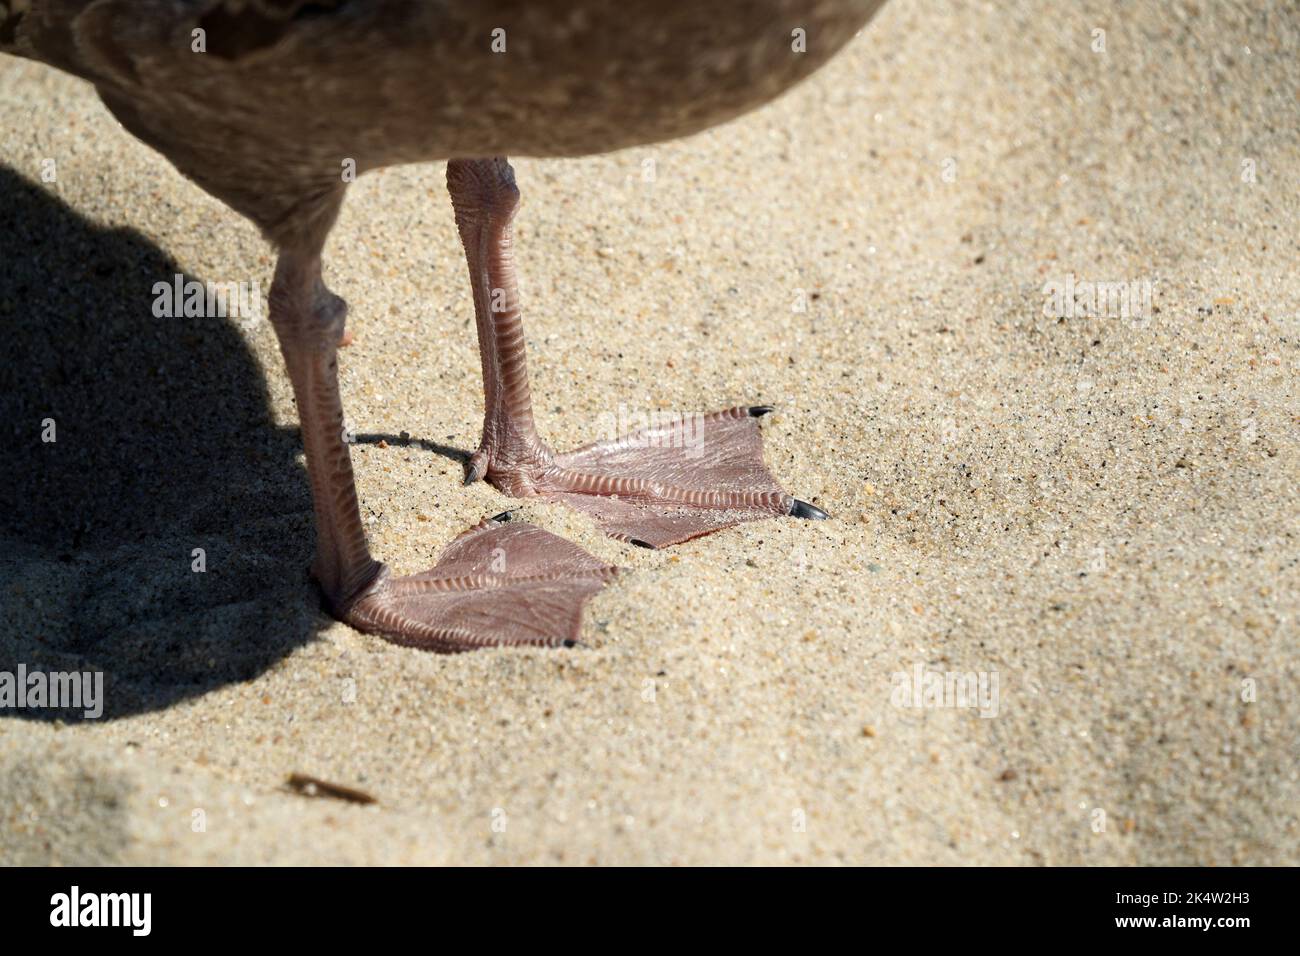 detail of paws of a seagull on nantucket island sandy beach atlantic ocean Stock Photo